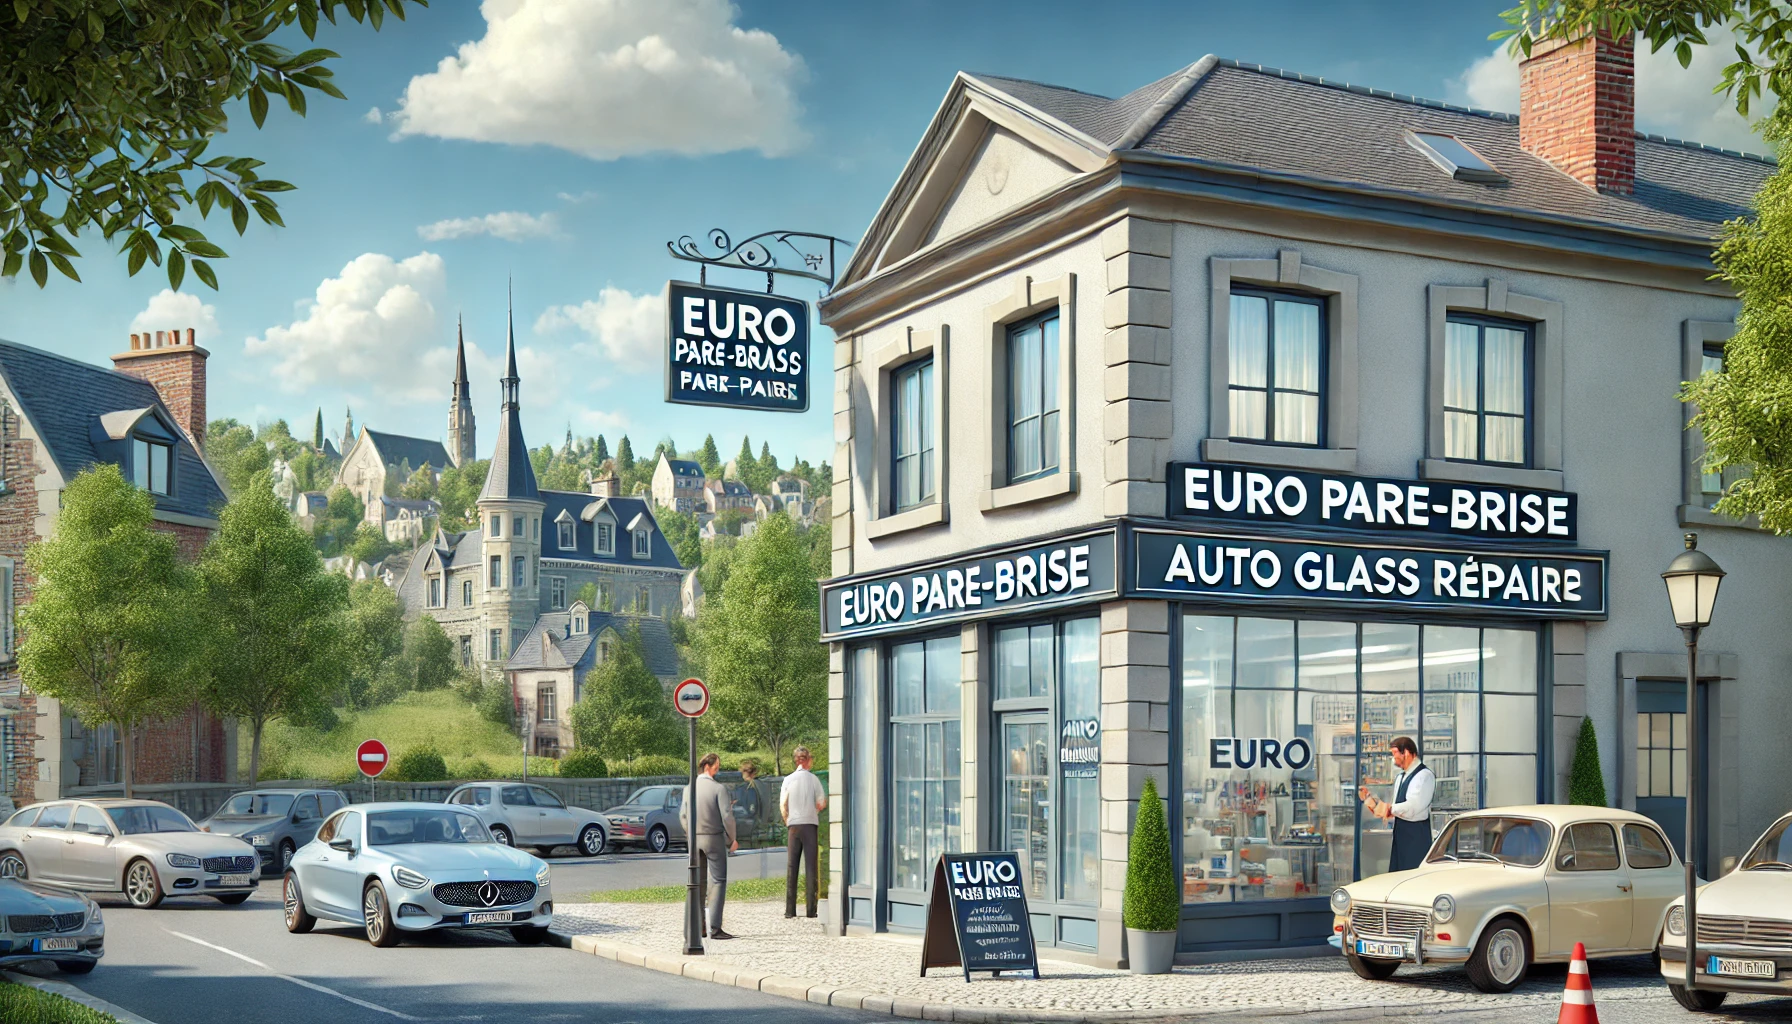 Euro Pare-Brise + Verdun Haudainville: Excellence in Auto Glass Repair and Replacement